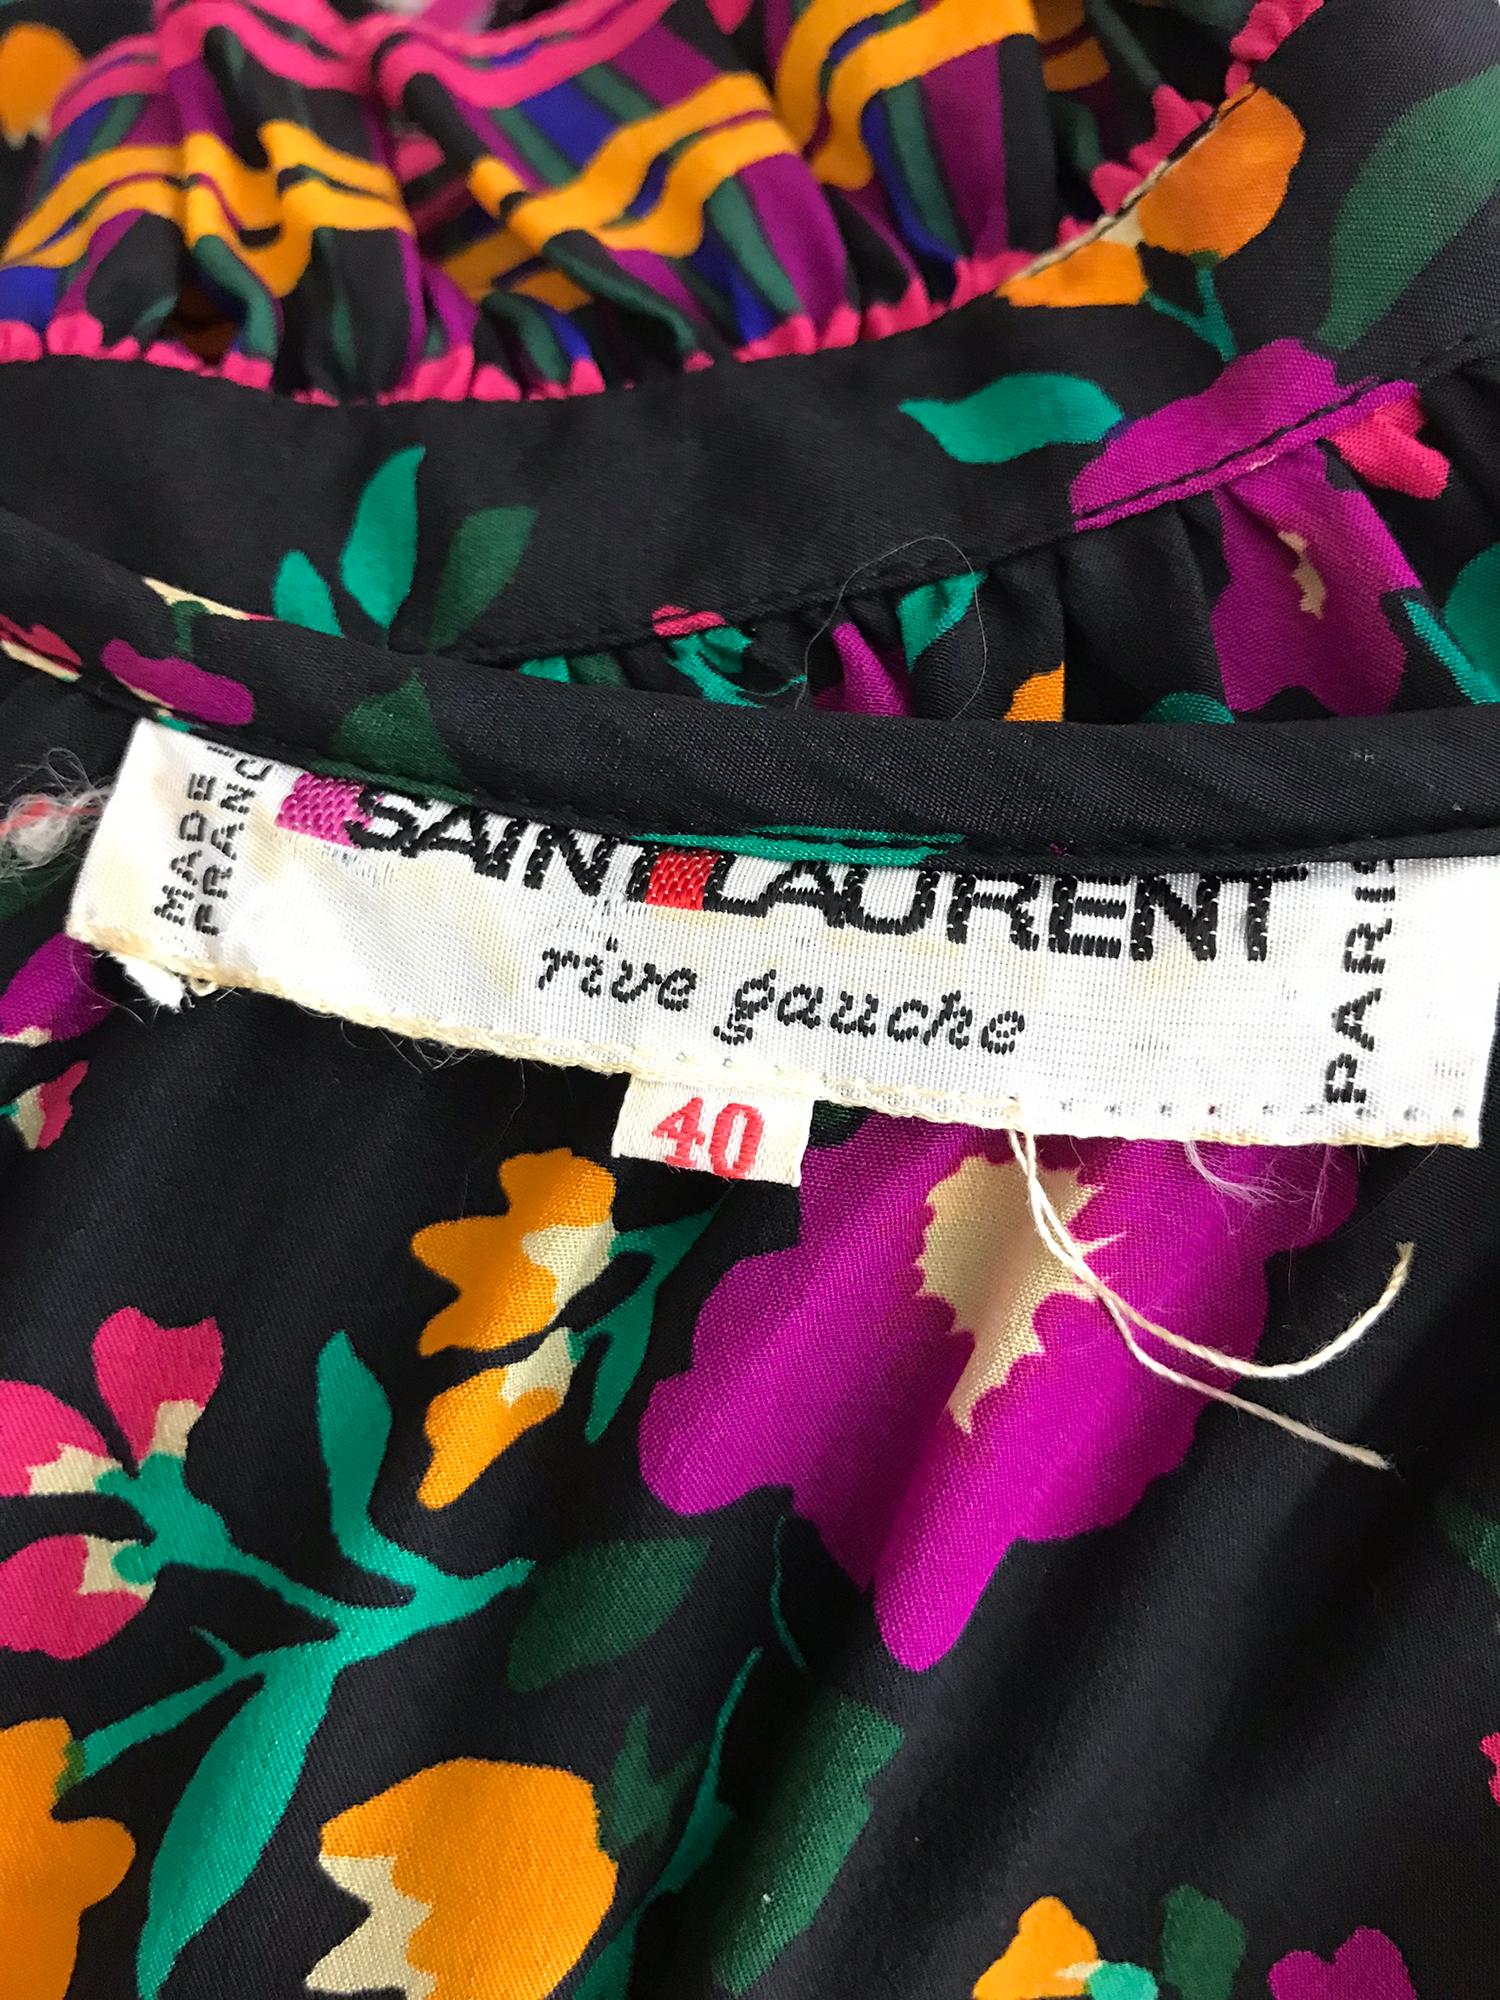 Yves Saint Laurent Rive Gauche floral silk mix print dress 1970s 9